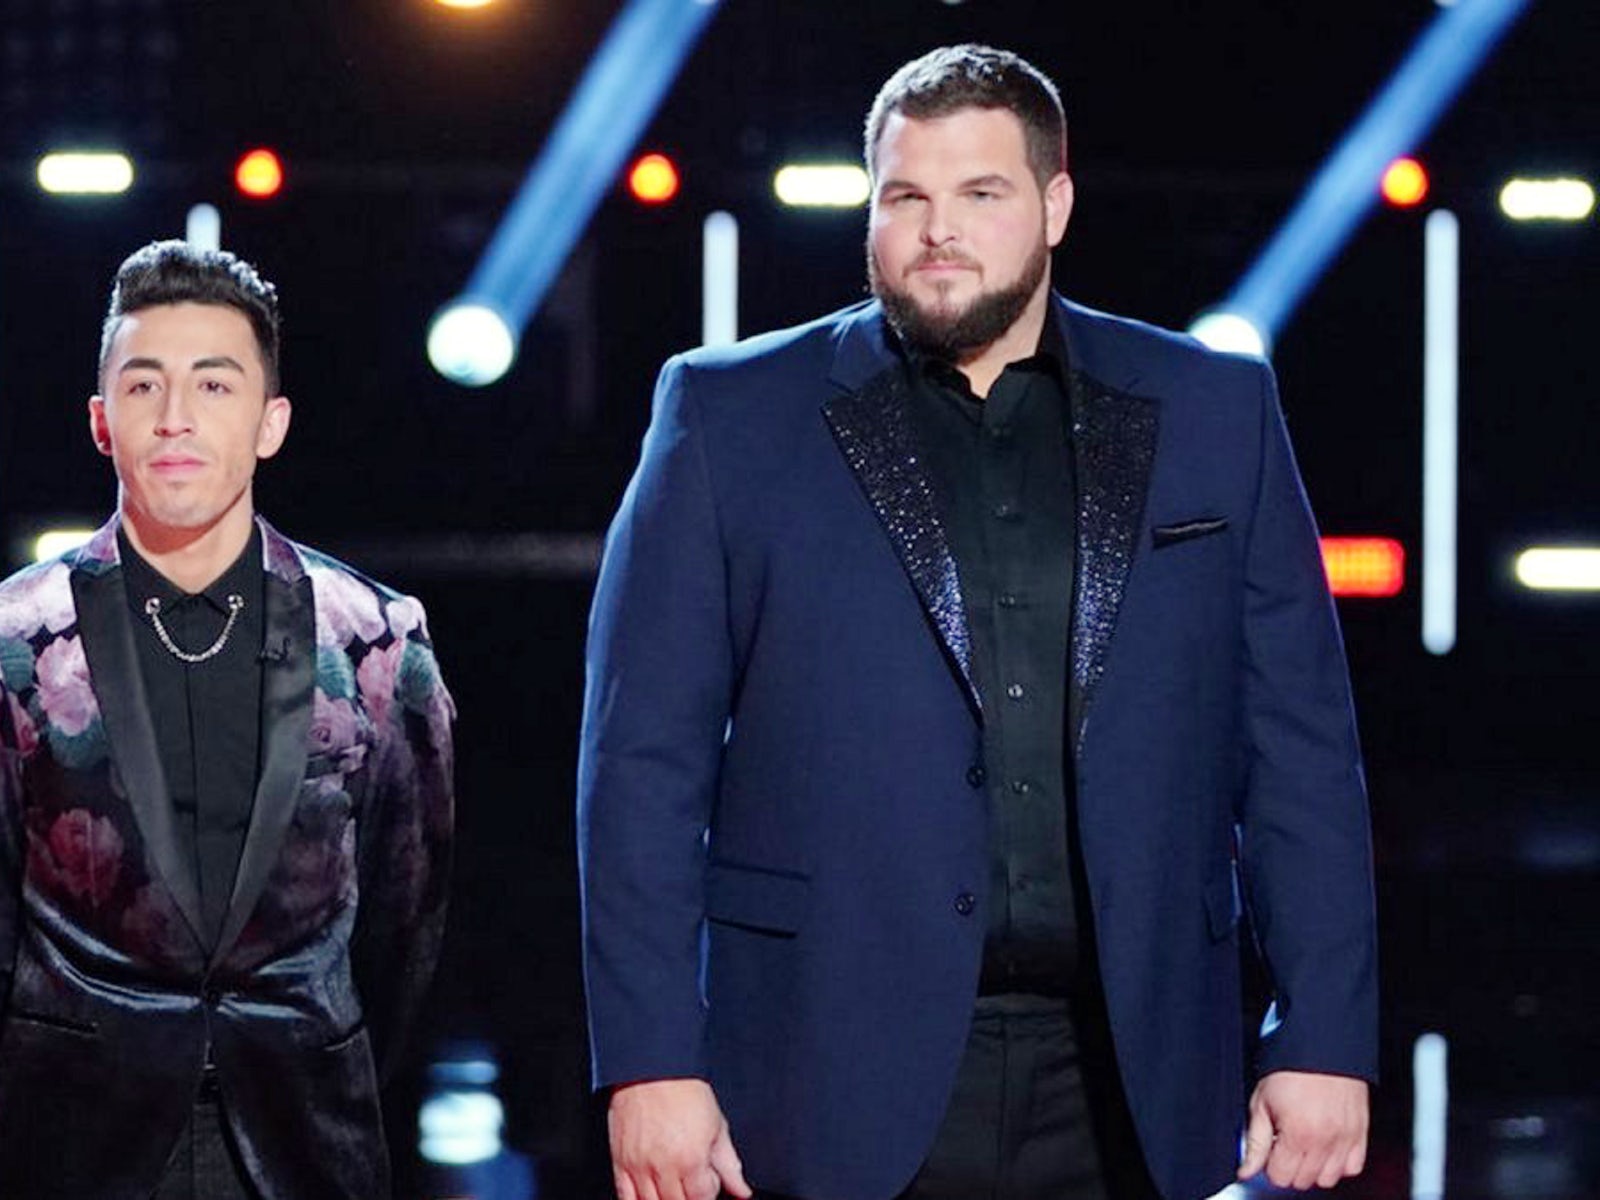 'The Voice' crowns Jake Hoot winner over runner-up Ricky Duran in Season 17 finale ...